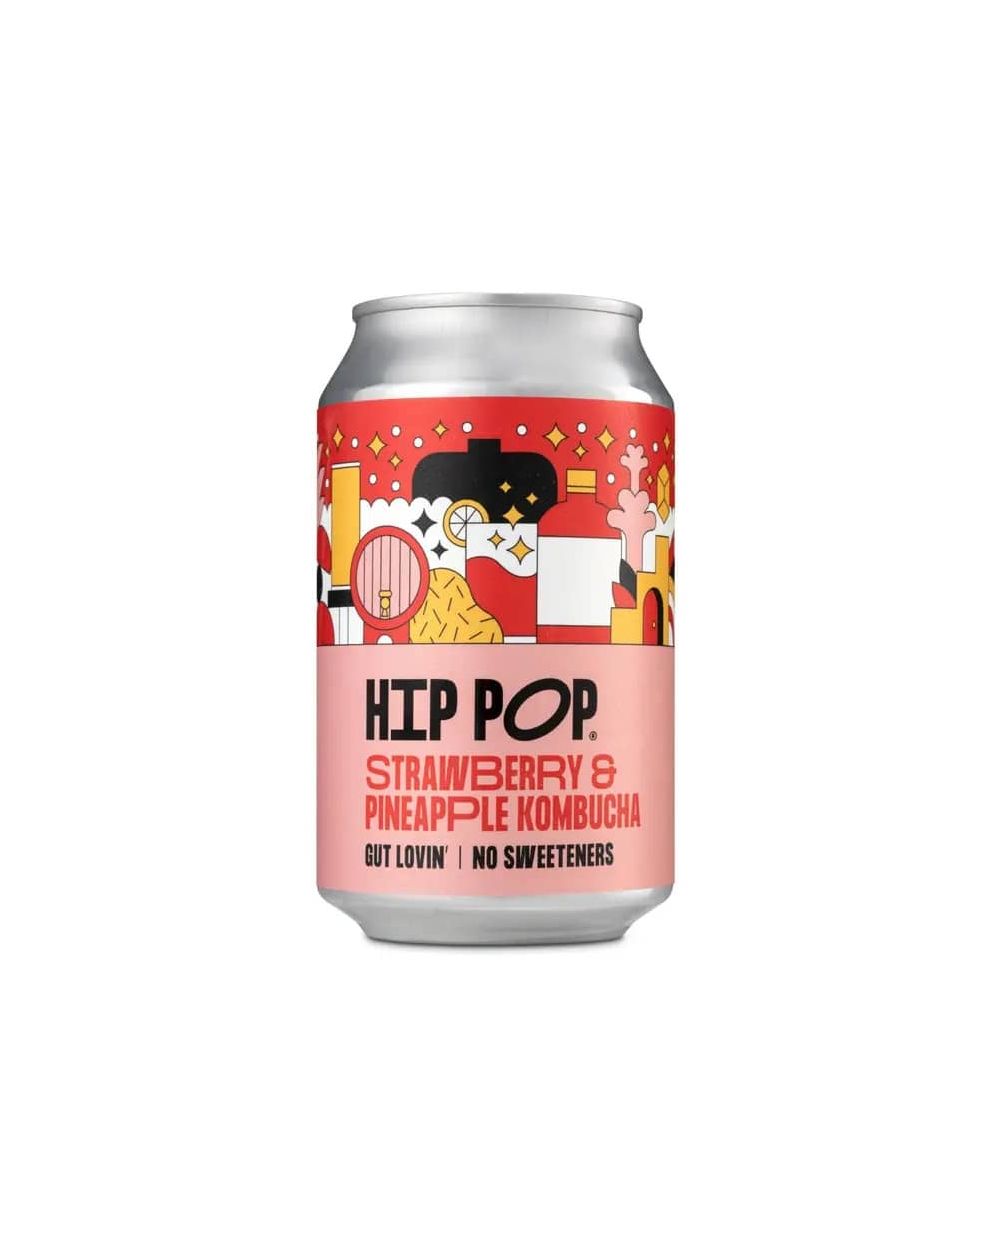 Hip Pop Strawberry & Pineapple Kombucha at Functional Drinks Club